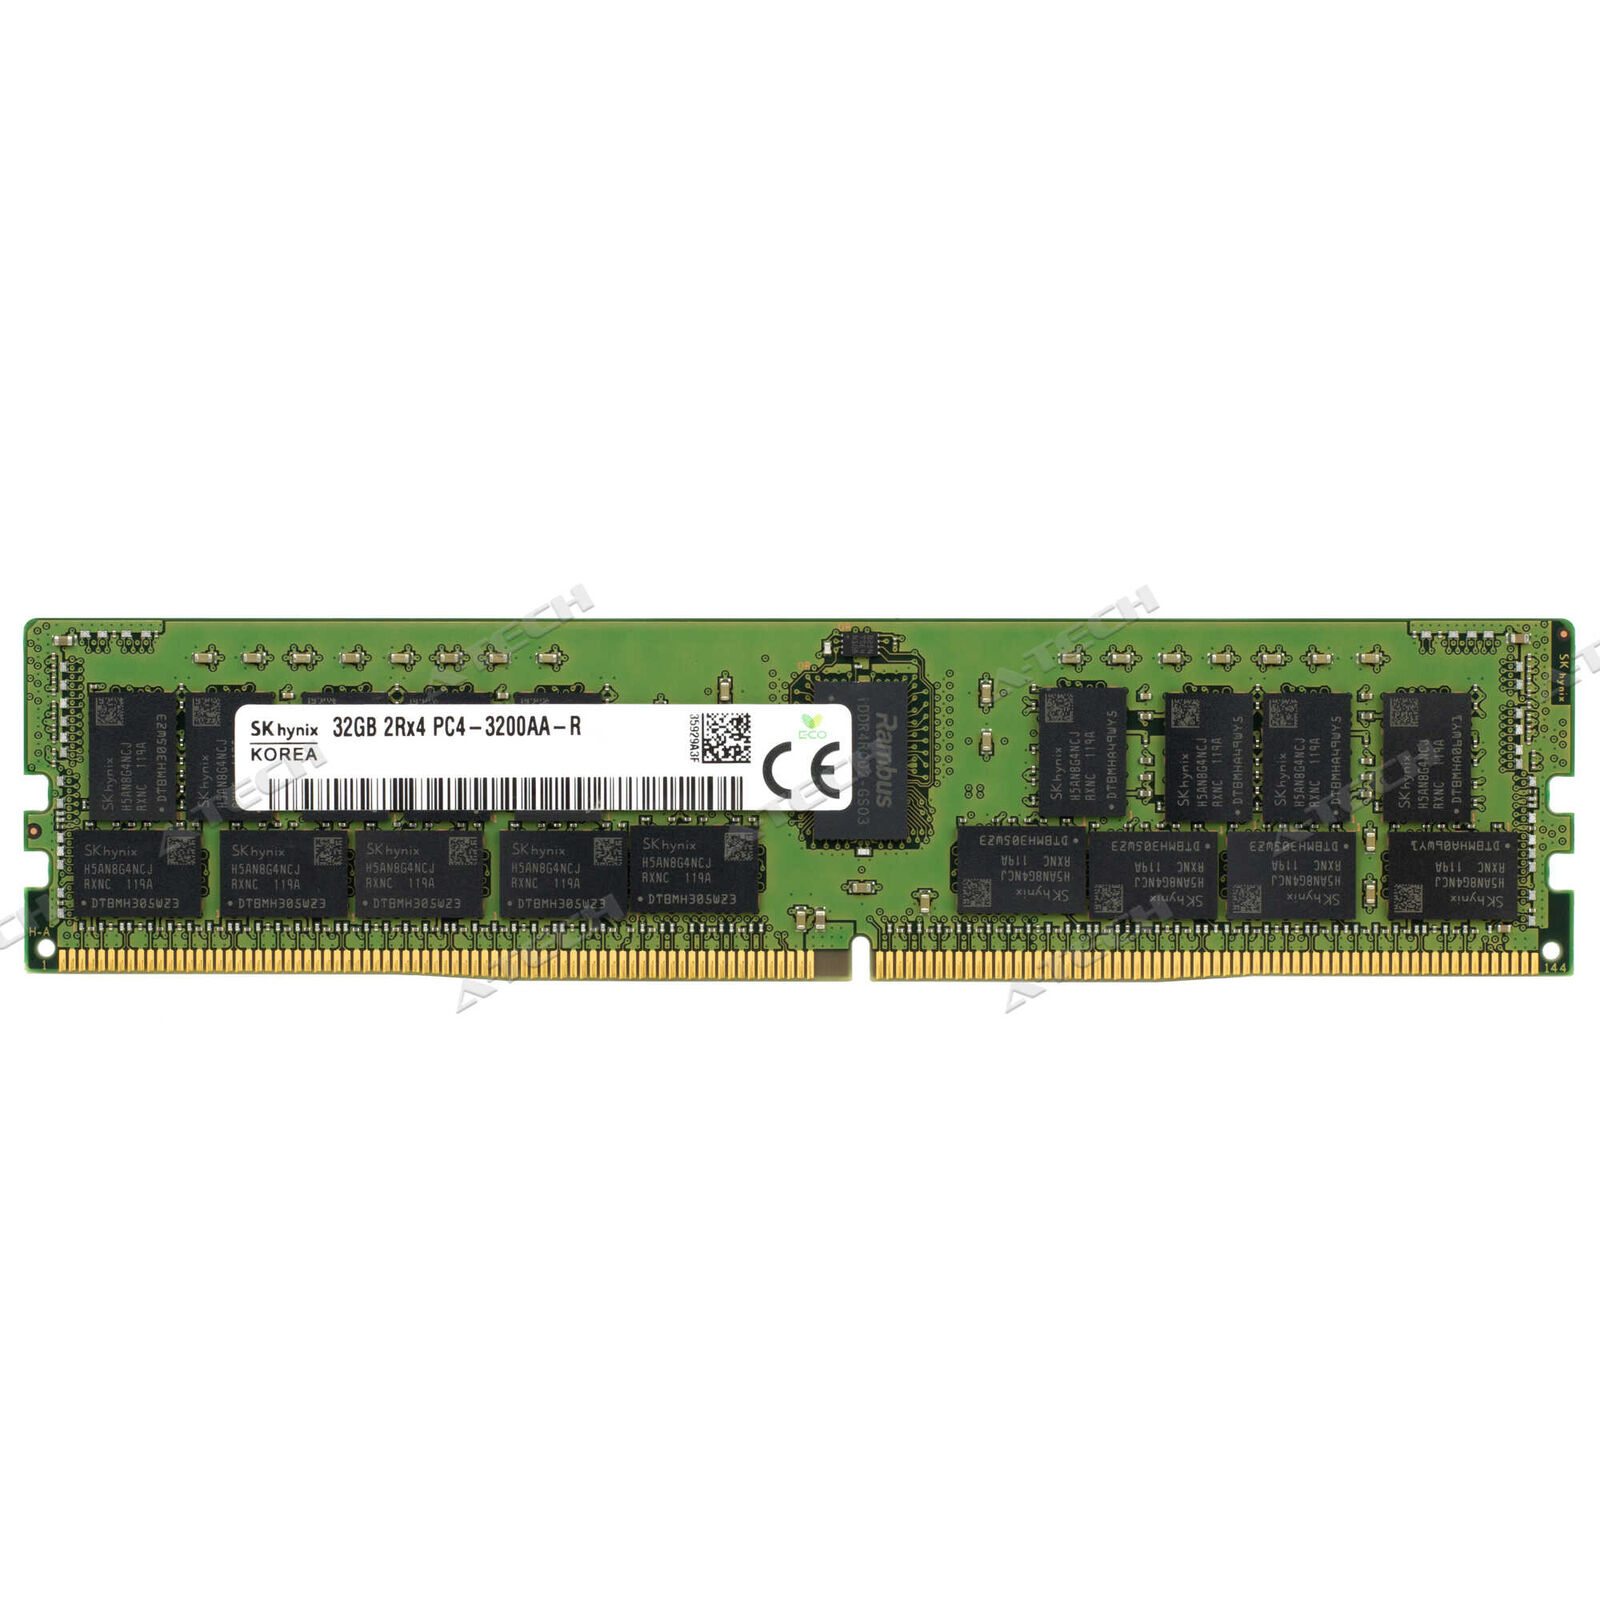 Hynix 32GB 2Rx4 PC4-3200 RDIMM DDR4-25600 ECC REG Registered Server Memory RAM